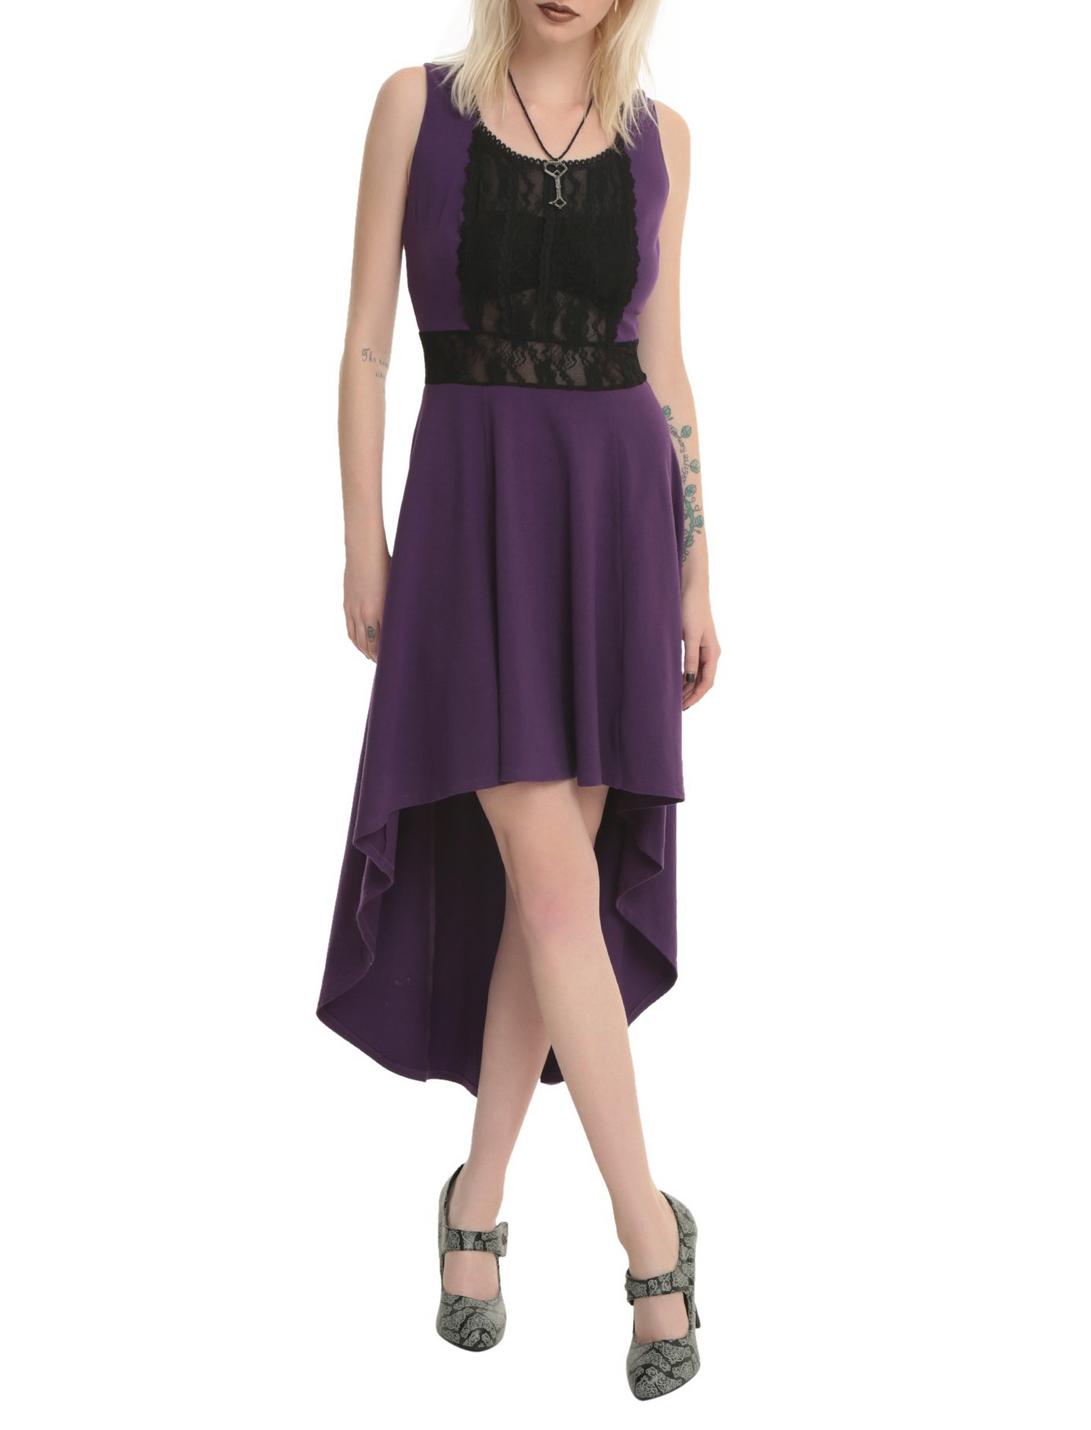 Royal Bones By Tripp Purple & Black Lace Hi-Lo Dress, PURPLE, hi-res